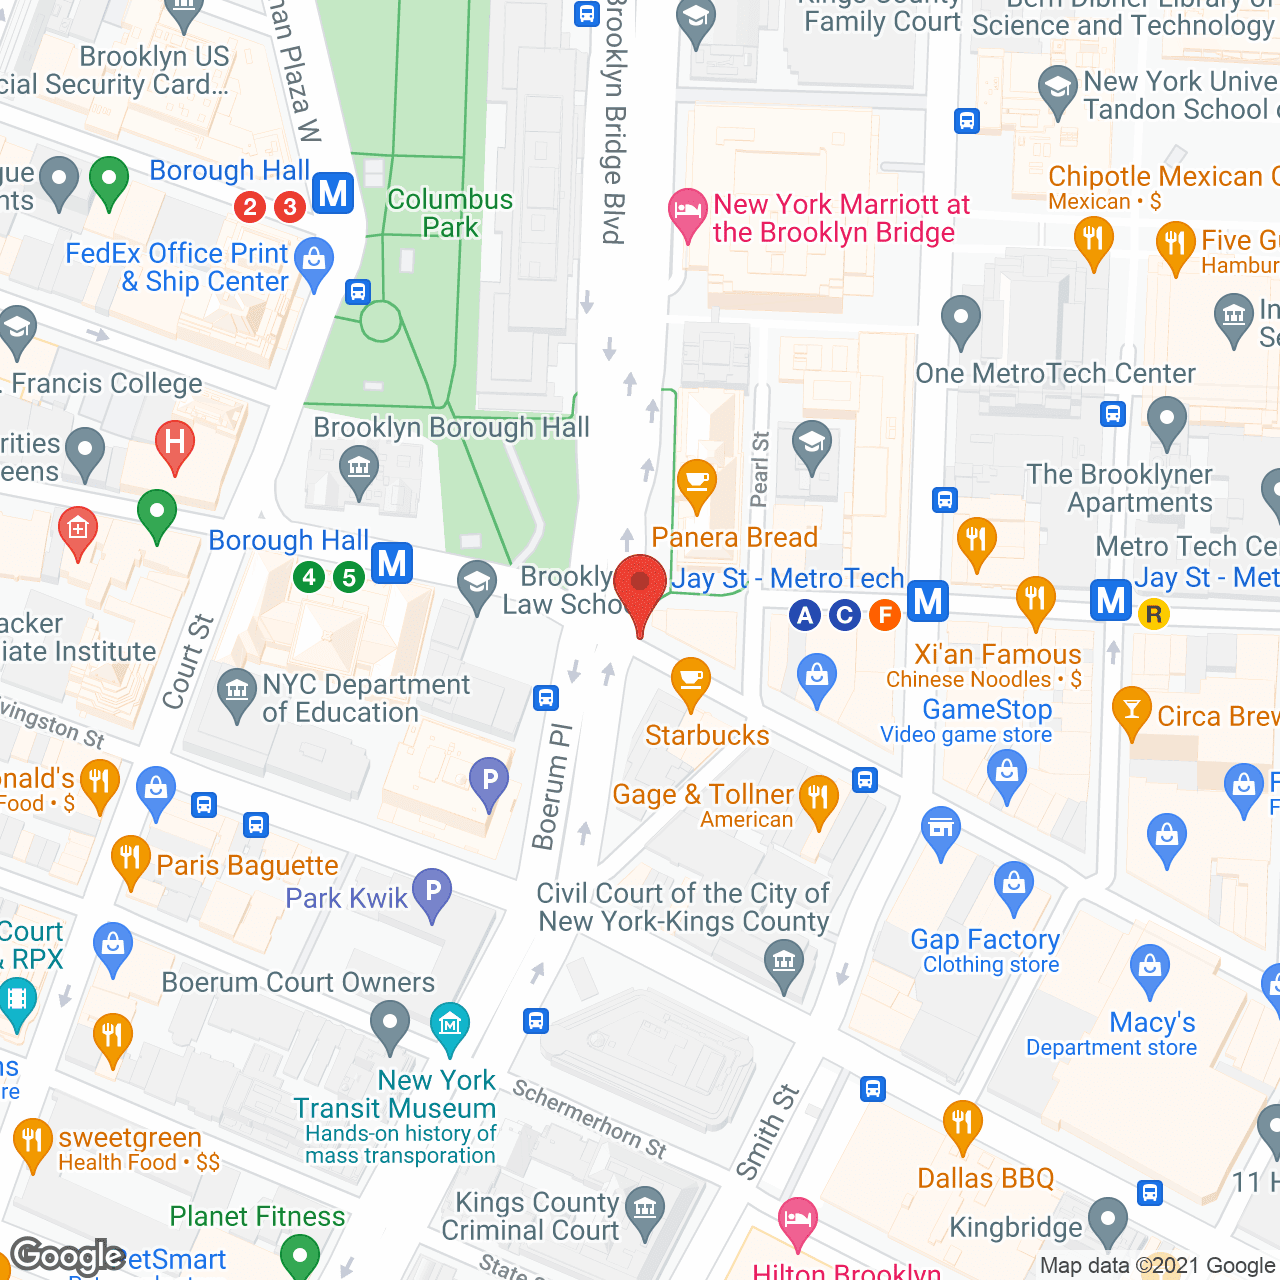 SeniorBridge - Brooklyn, NY in google map